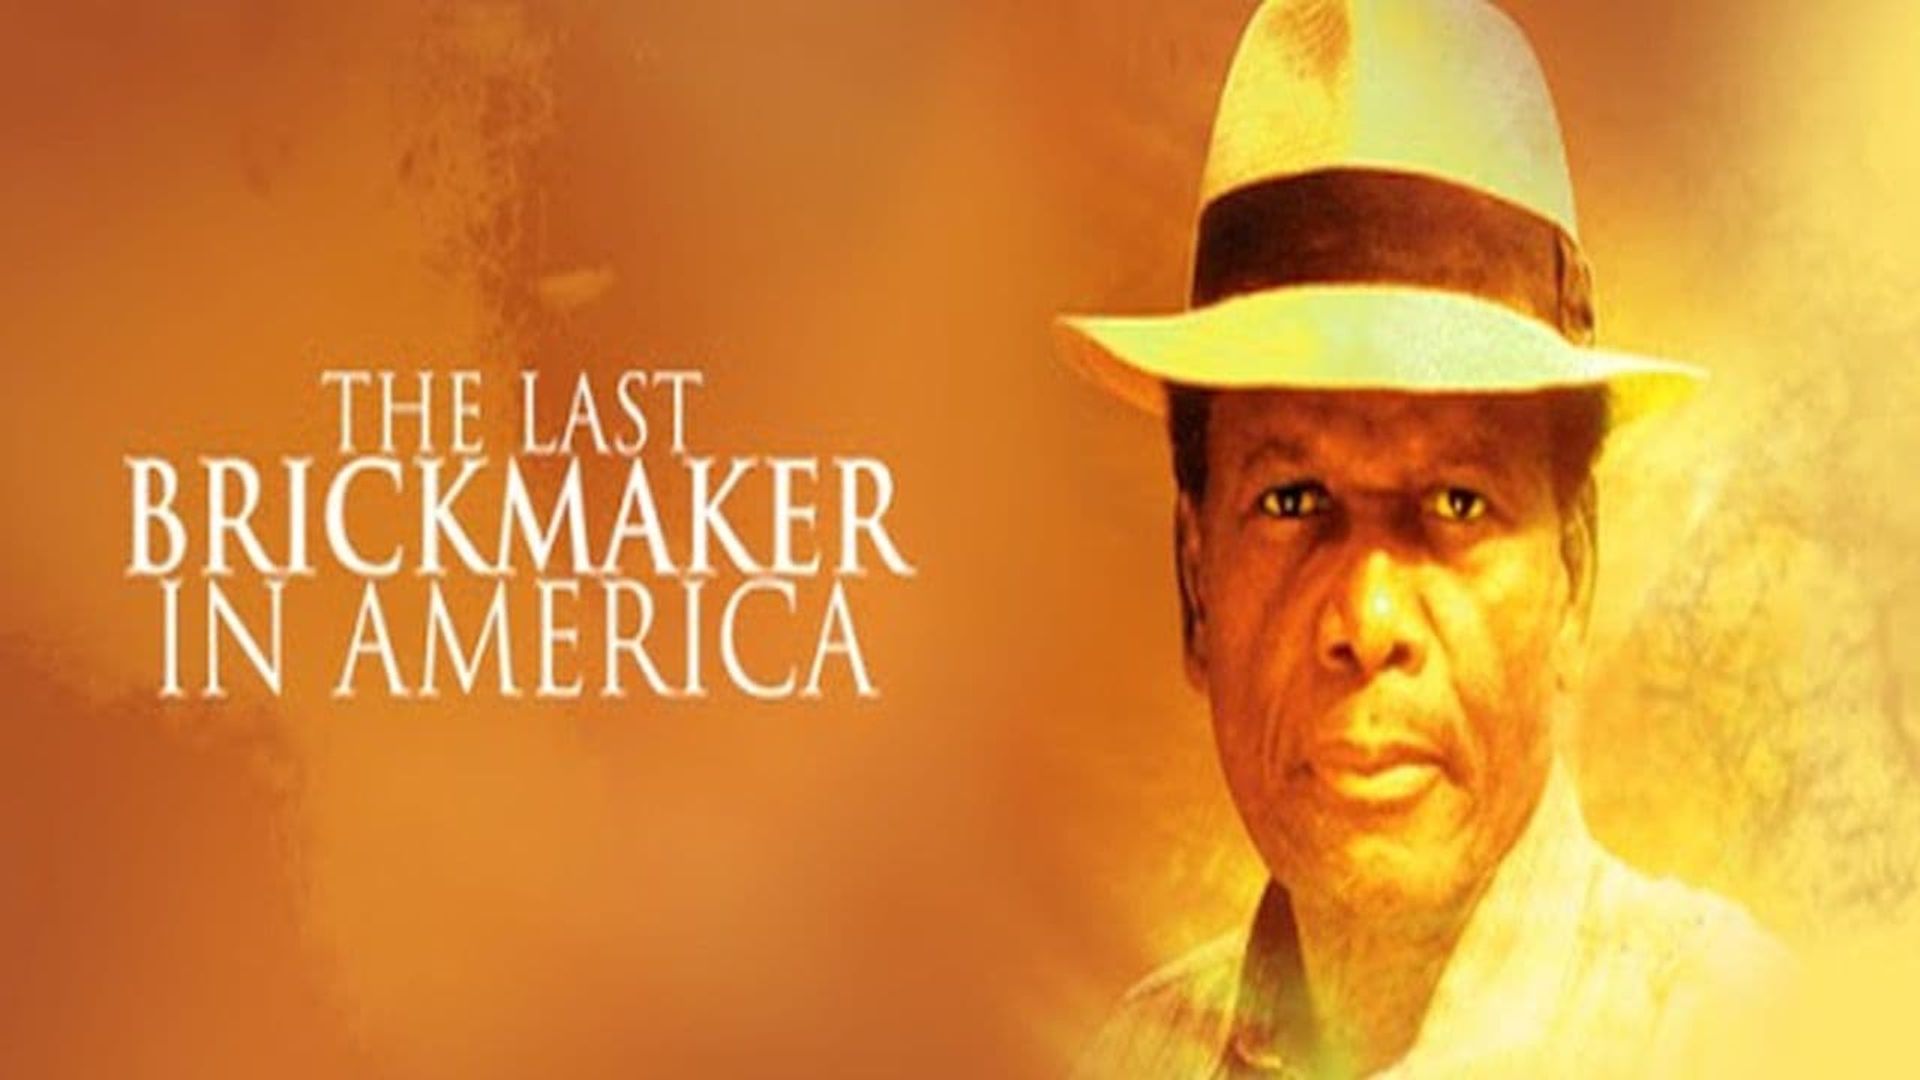 The Last Brickmaker in America Backdrop